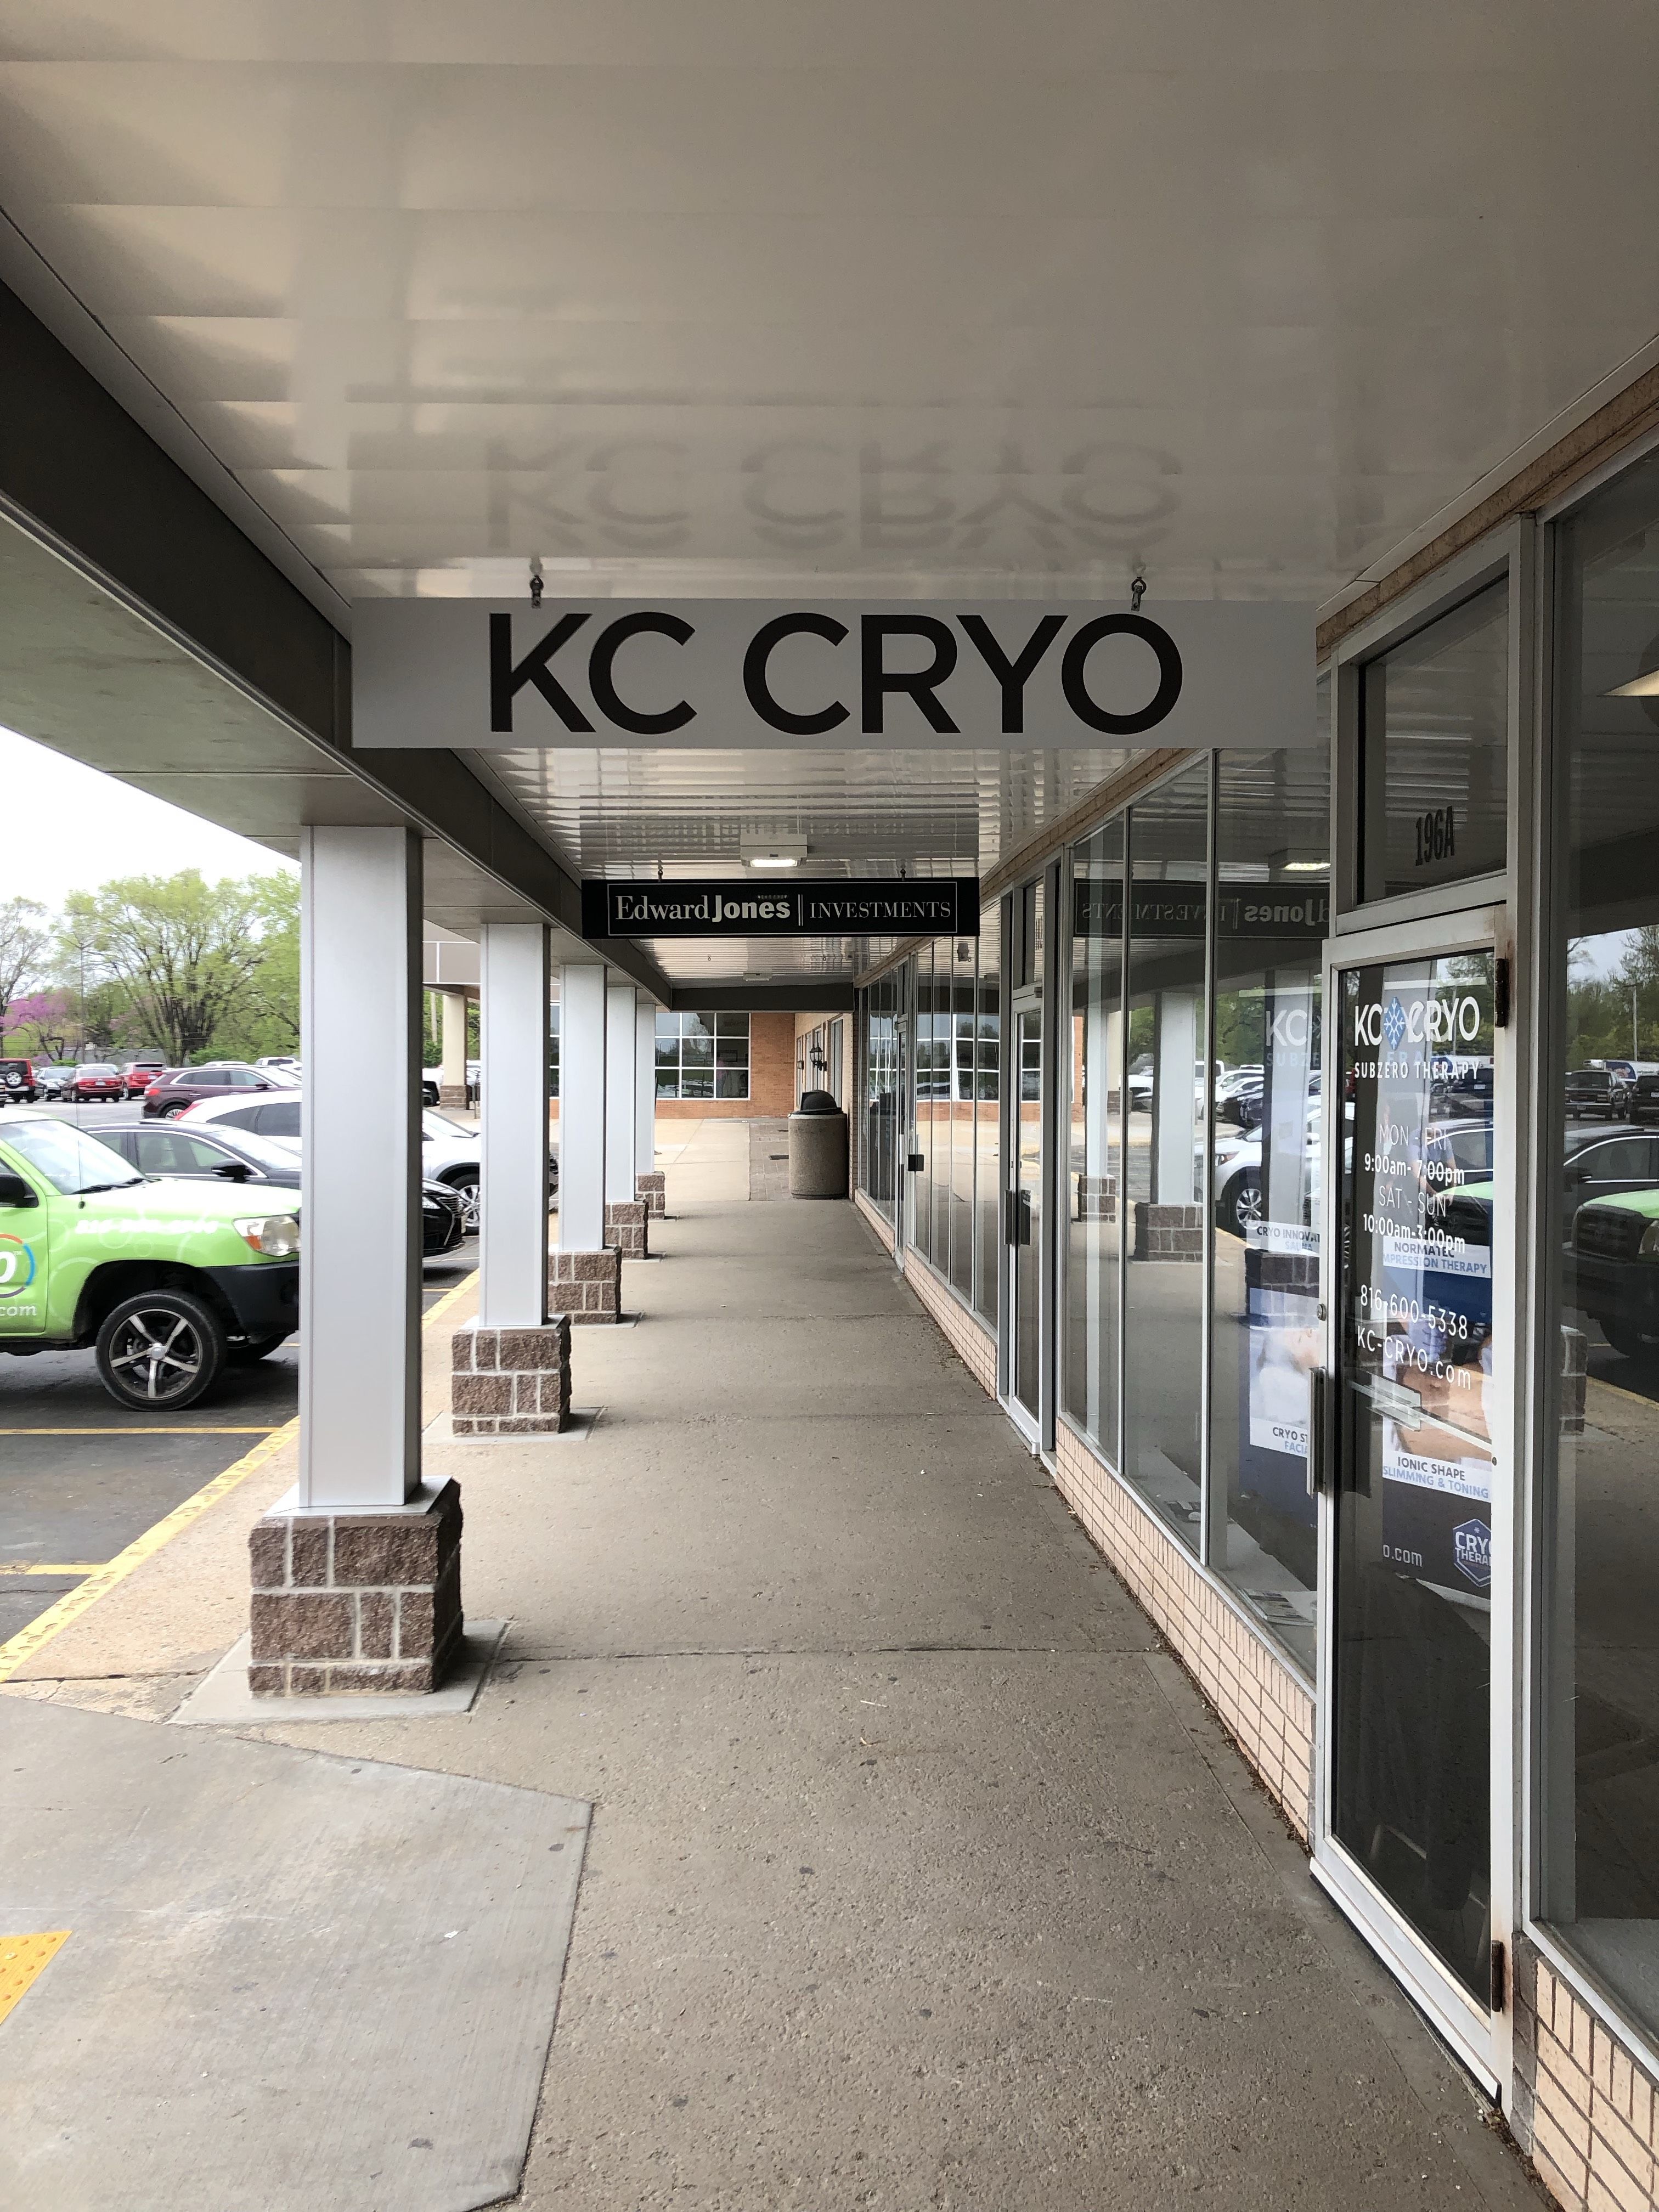 kc cryo wayfinding sign blog post image